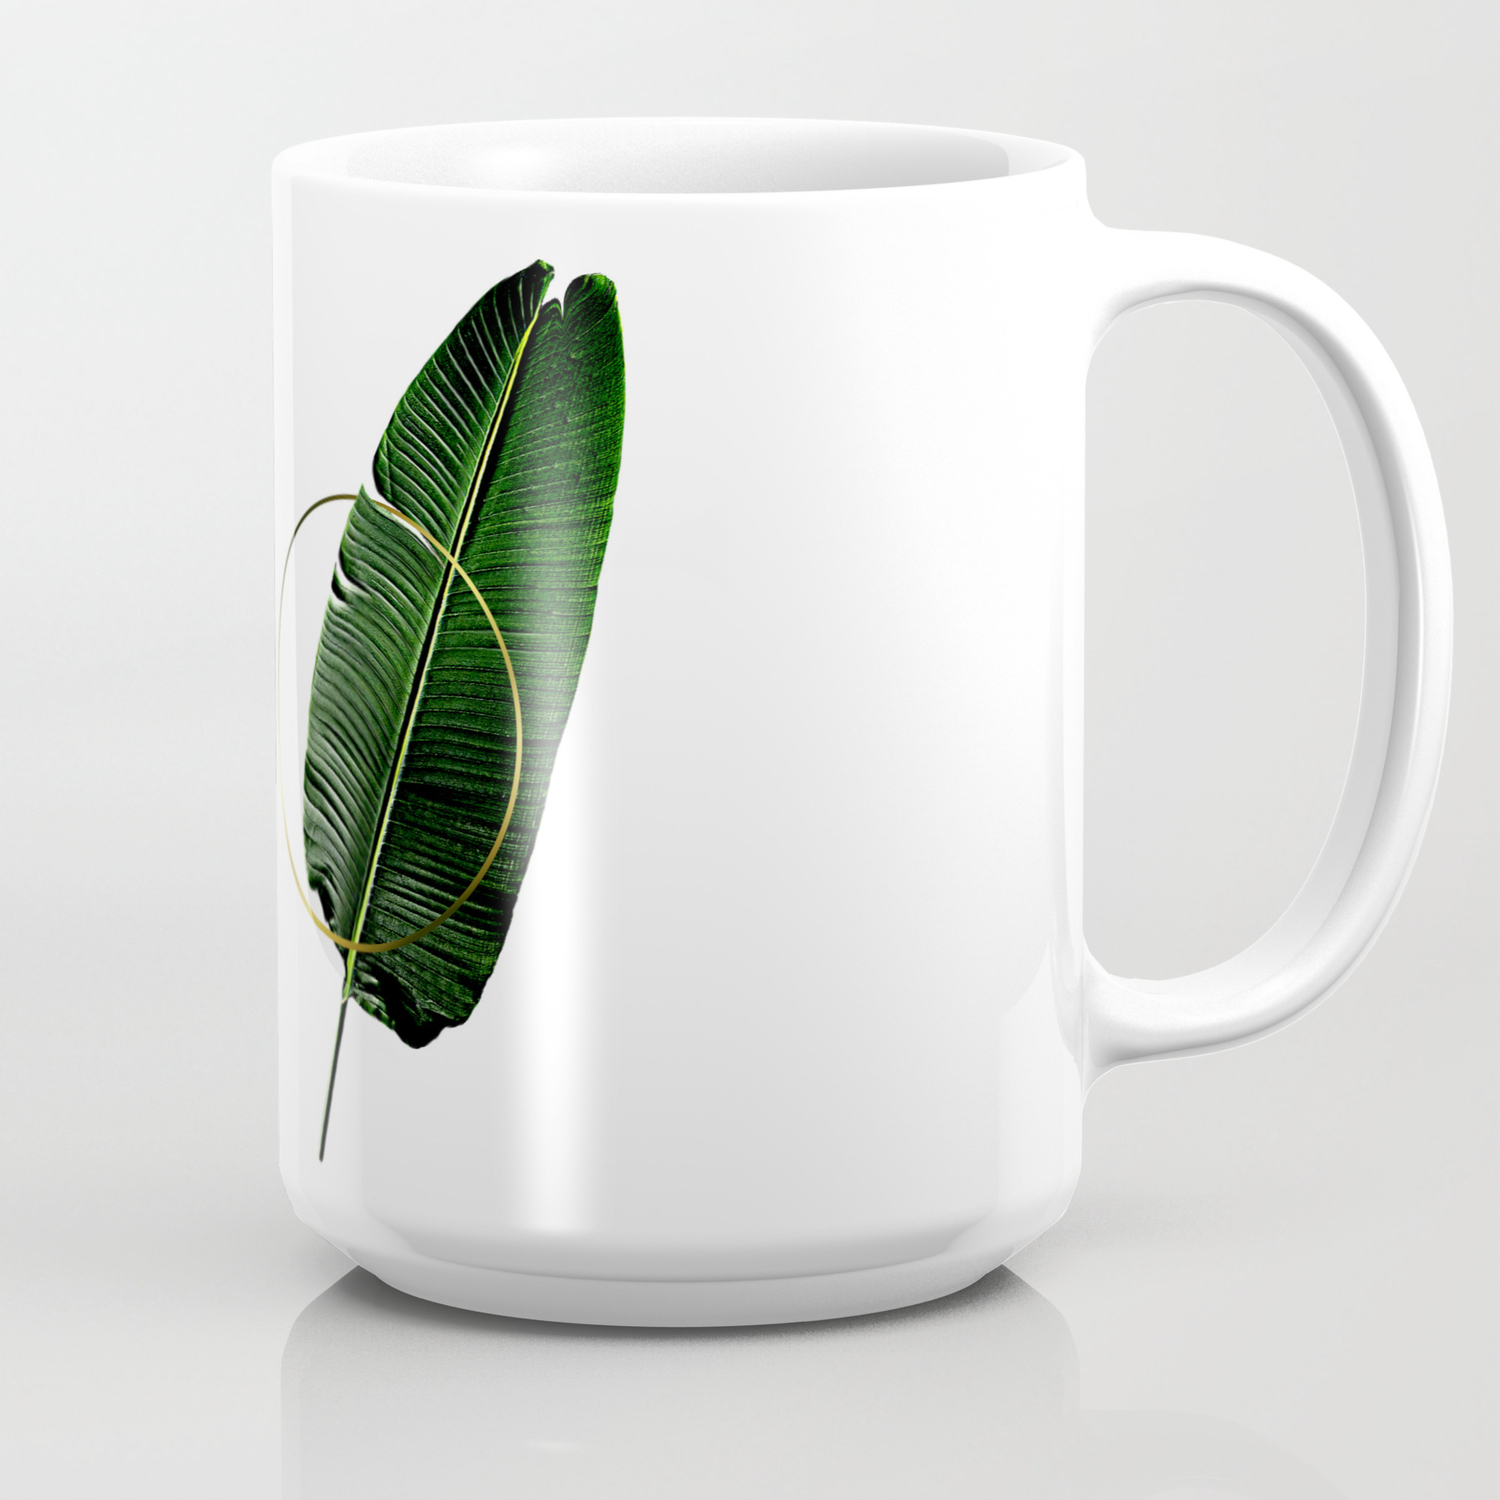 Nature Mug Green Coffee Mug Ceramic Mug Set Green Ceramic Mug Leaf Mug 15oz Mug Minimalist Mug Set Nature Ceramic Mug